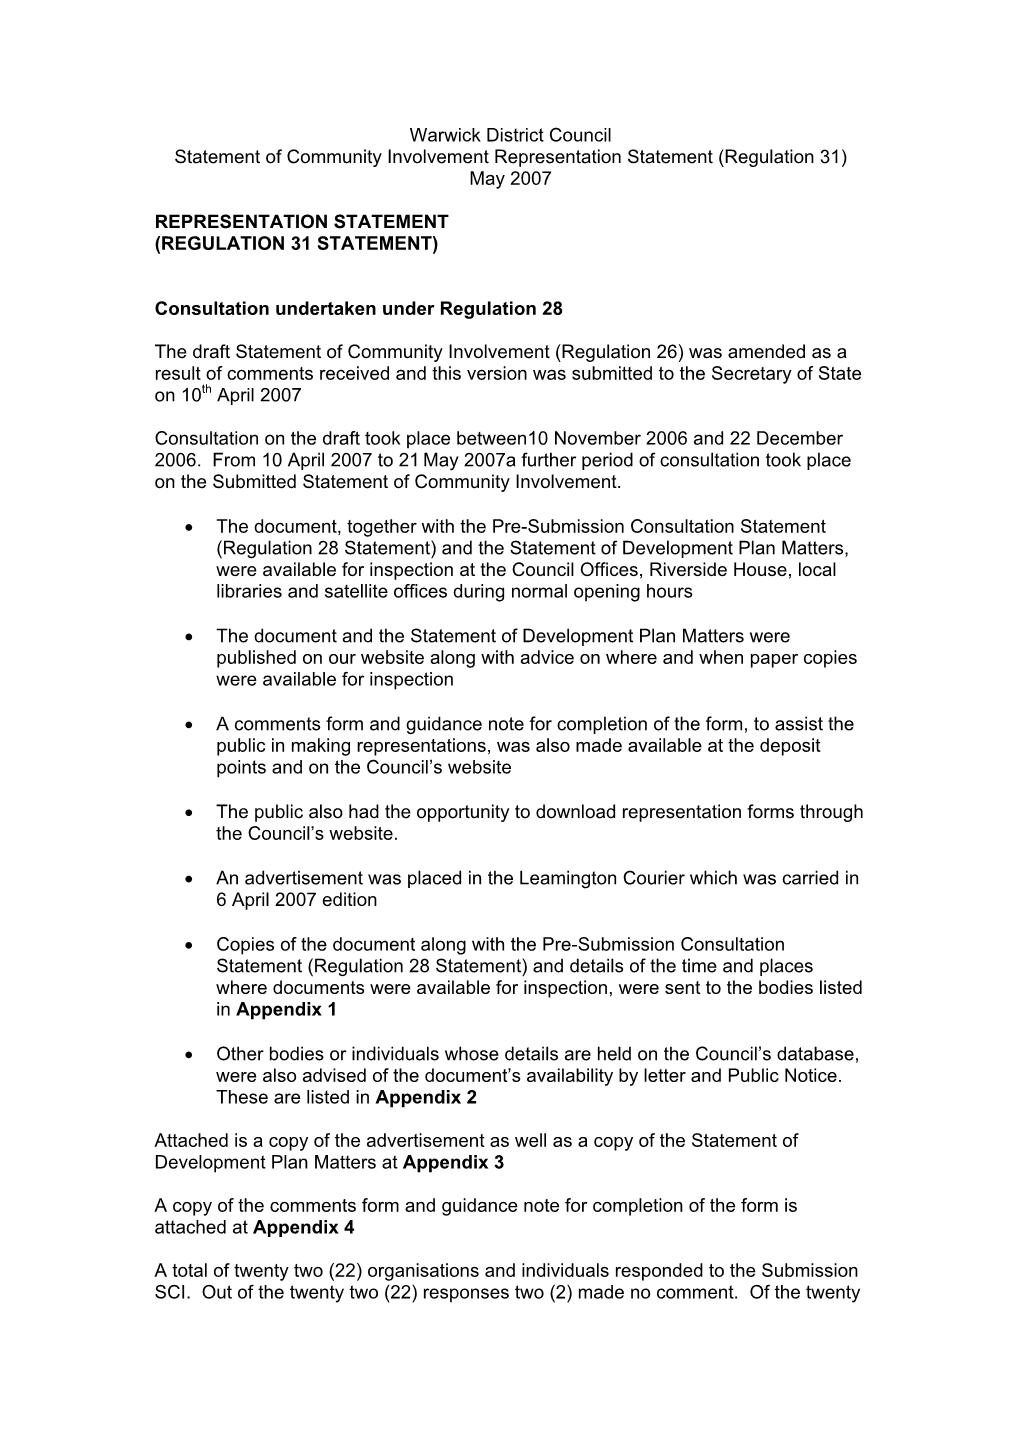 Warwick District Council Statement of Community Involvement Representation Statement (Regulation 31) May 2007